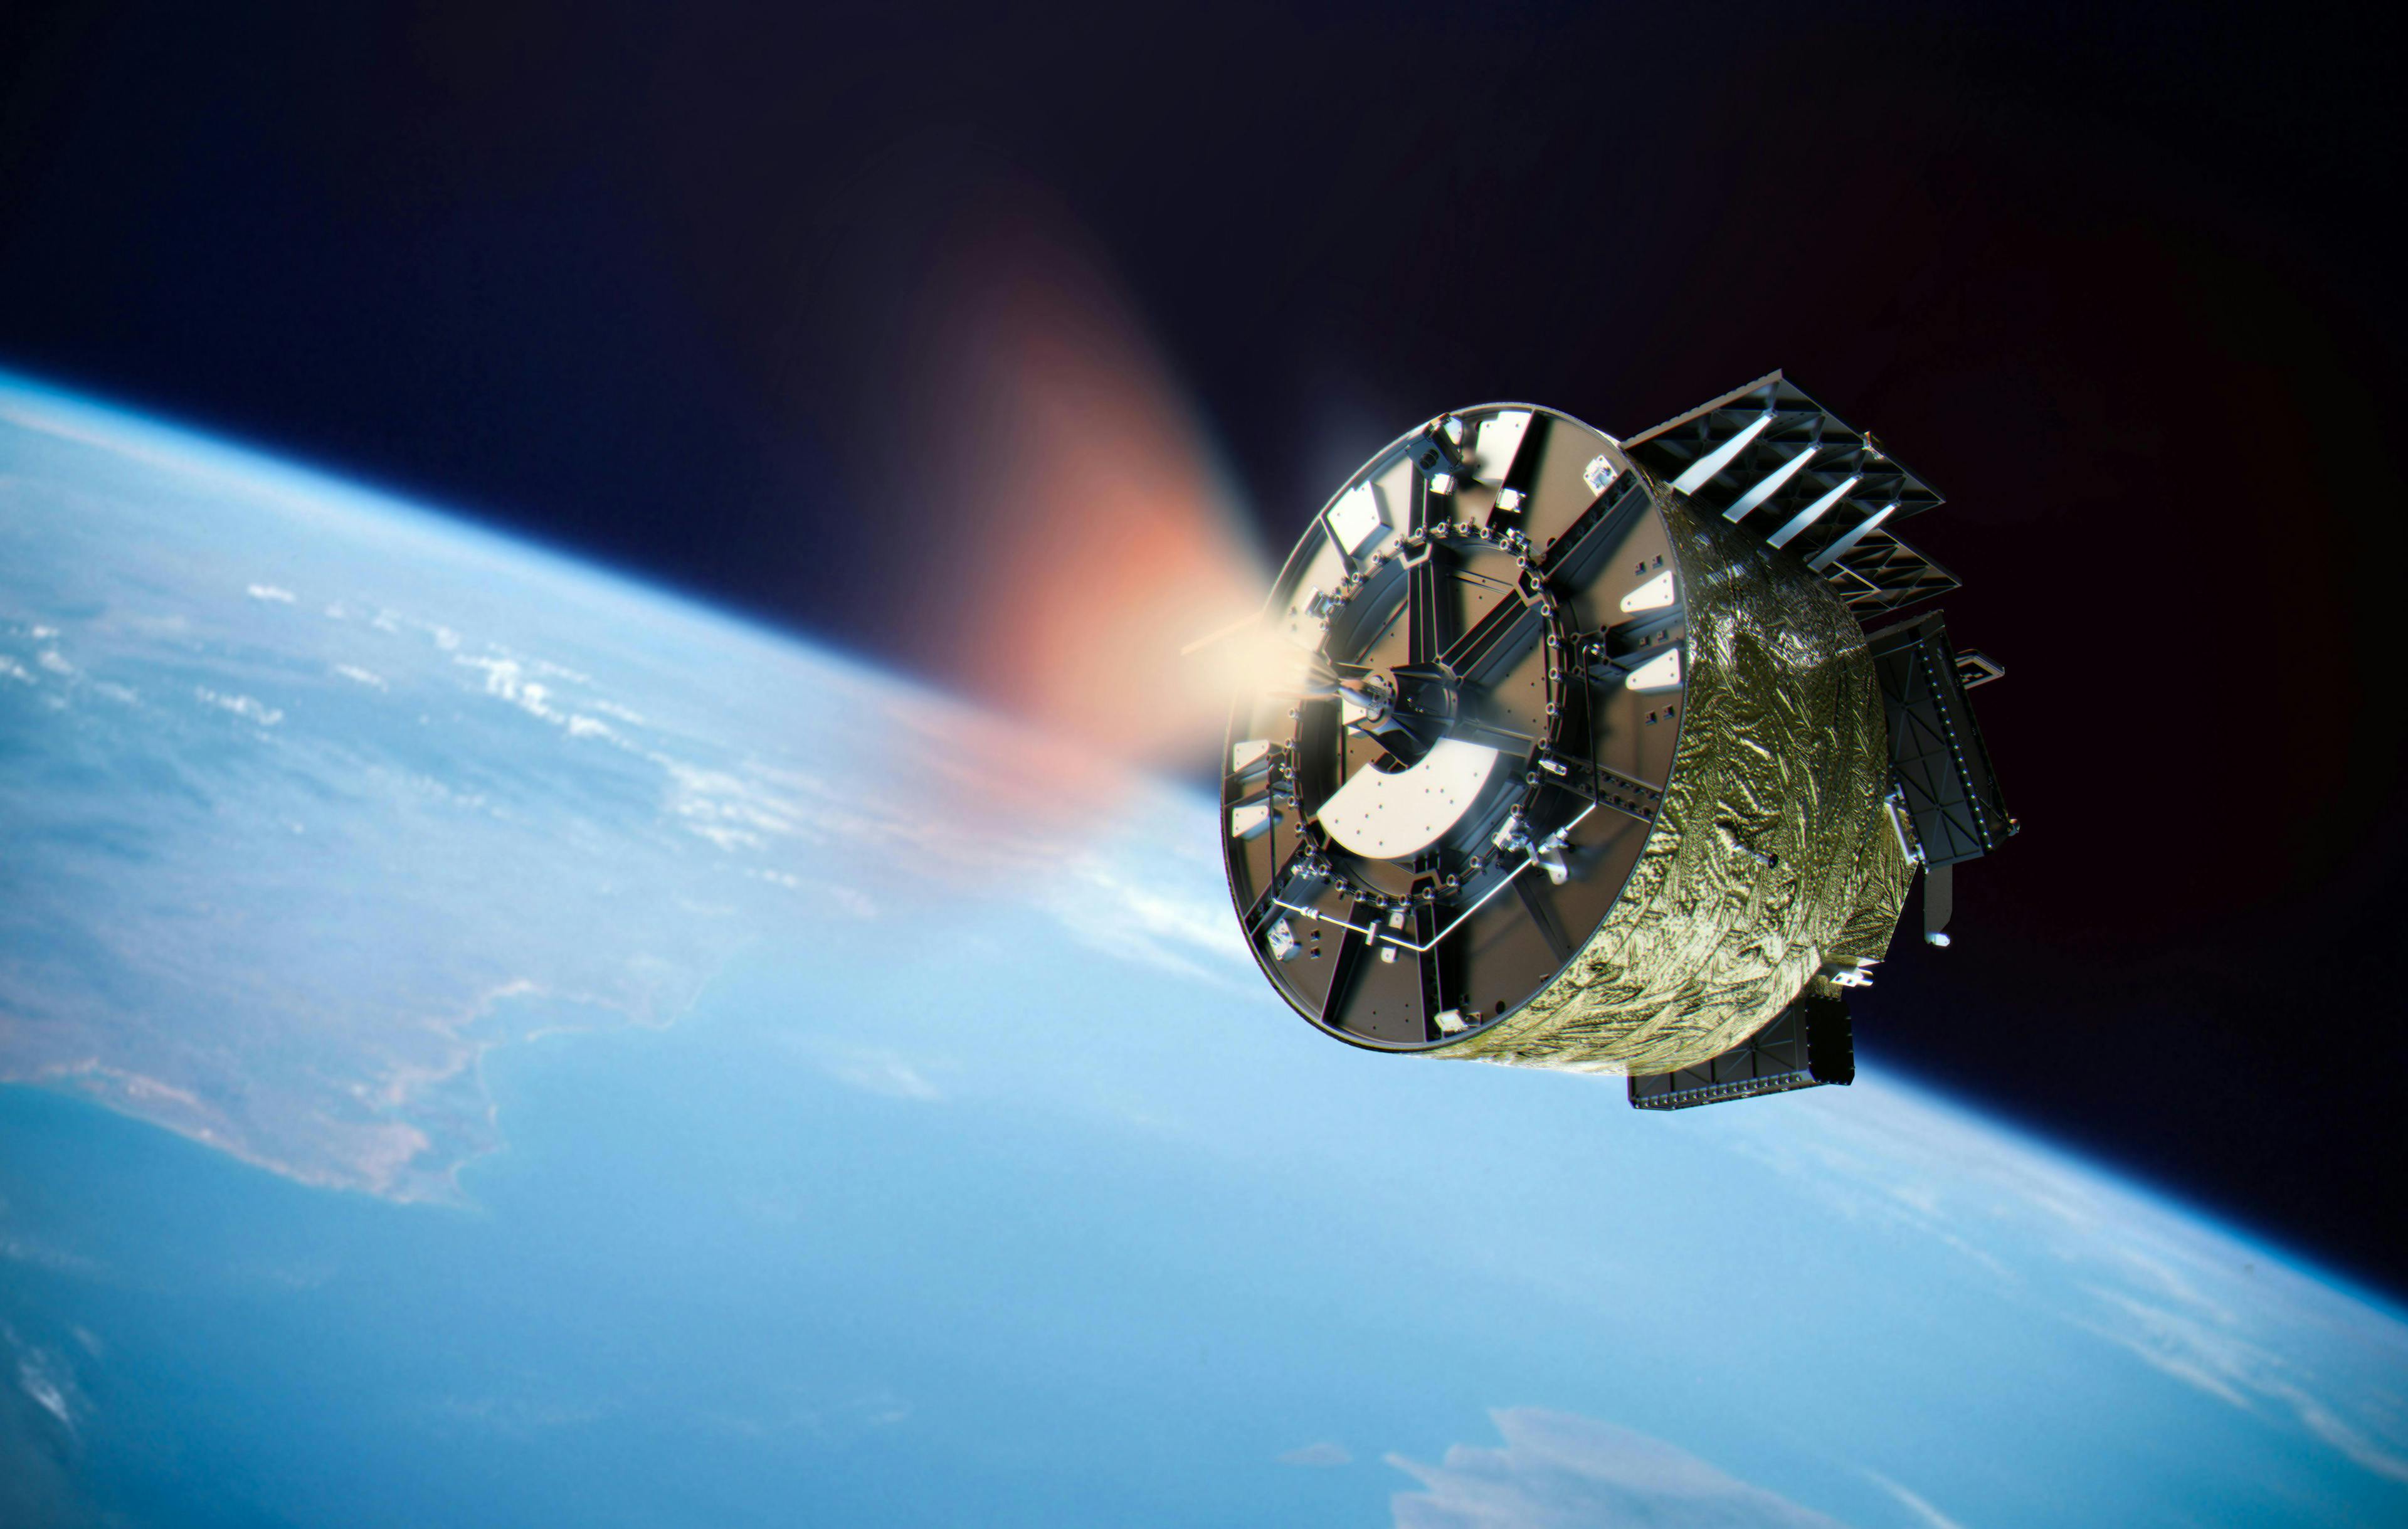 Optimus satellite launch marks a new era for Australia and satellite servicing